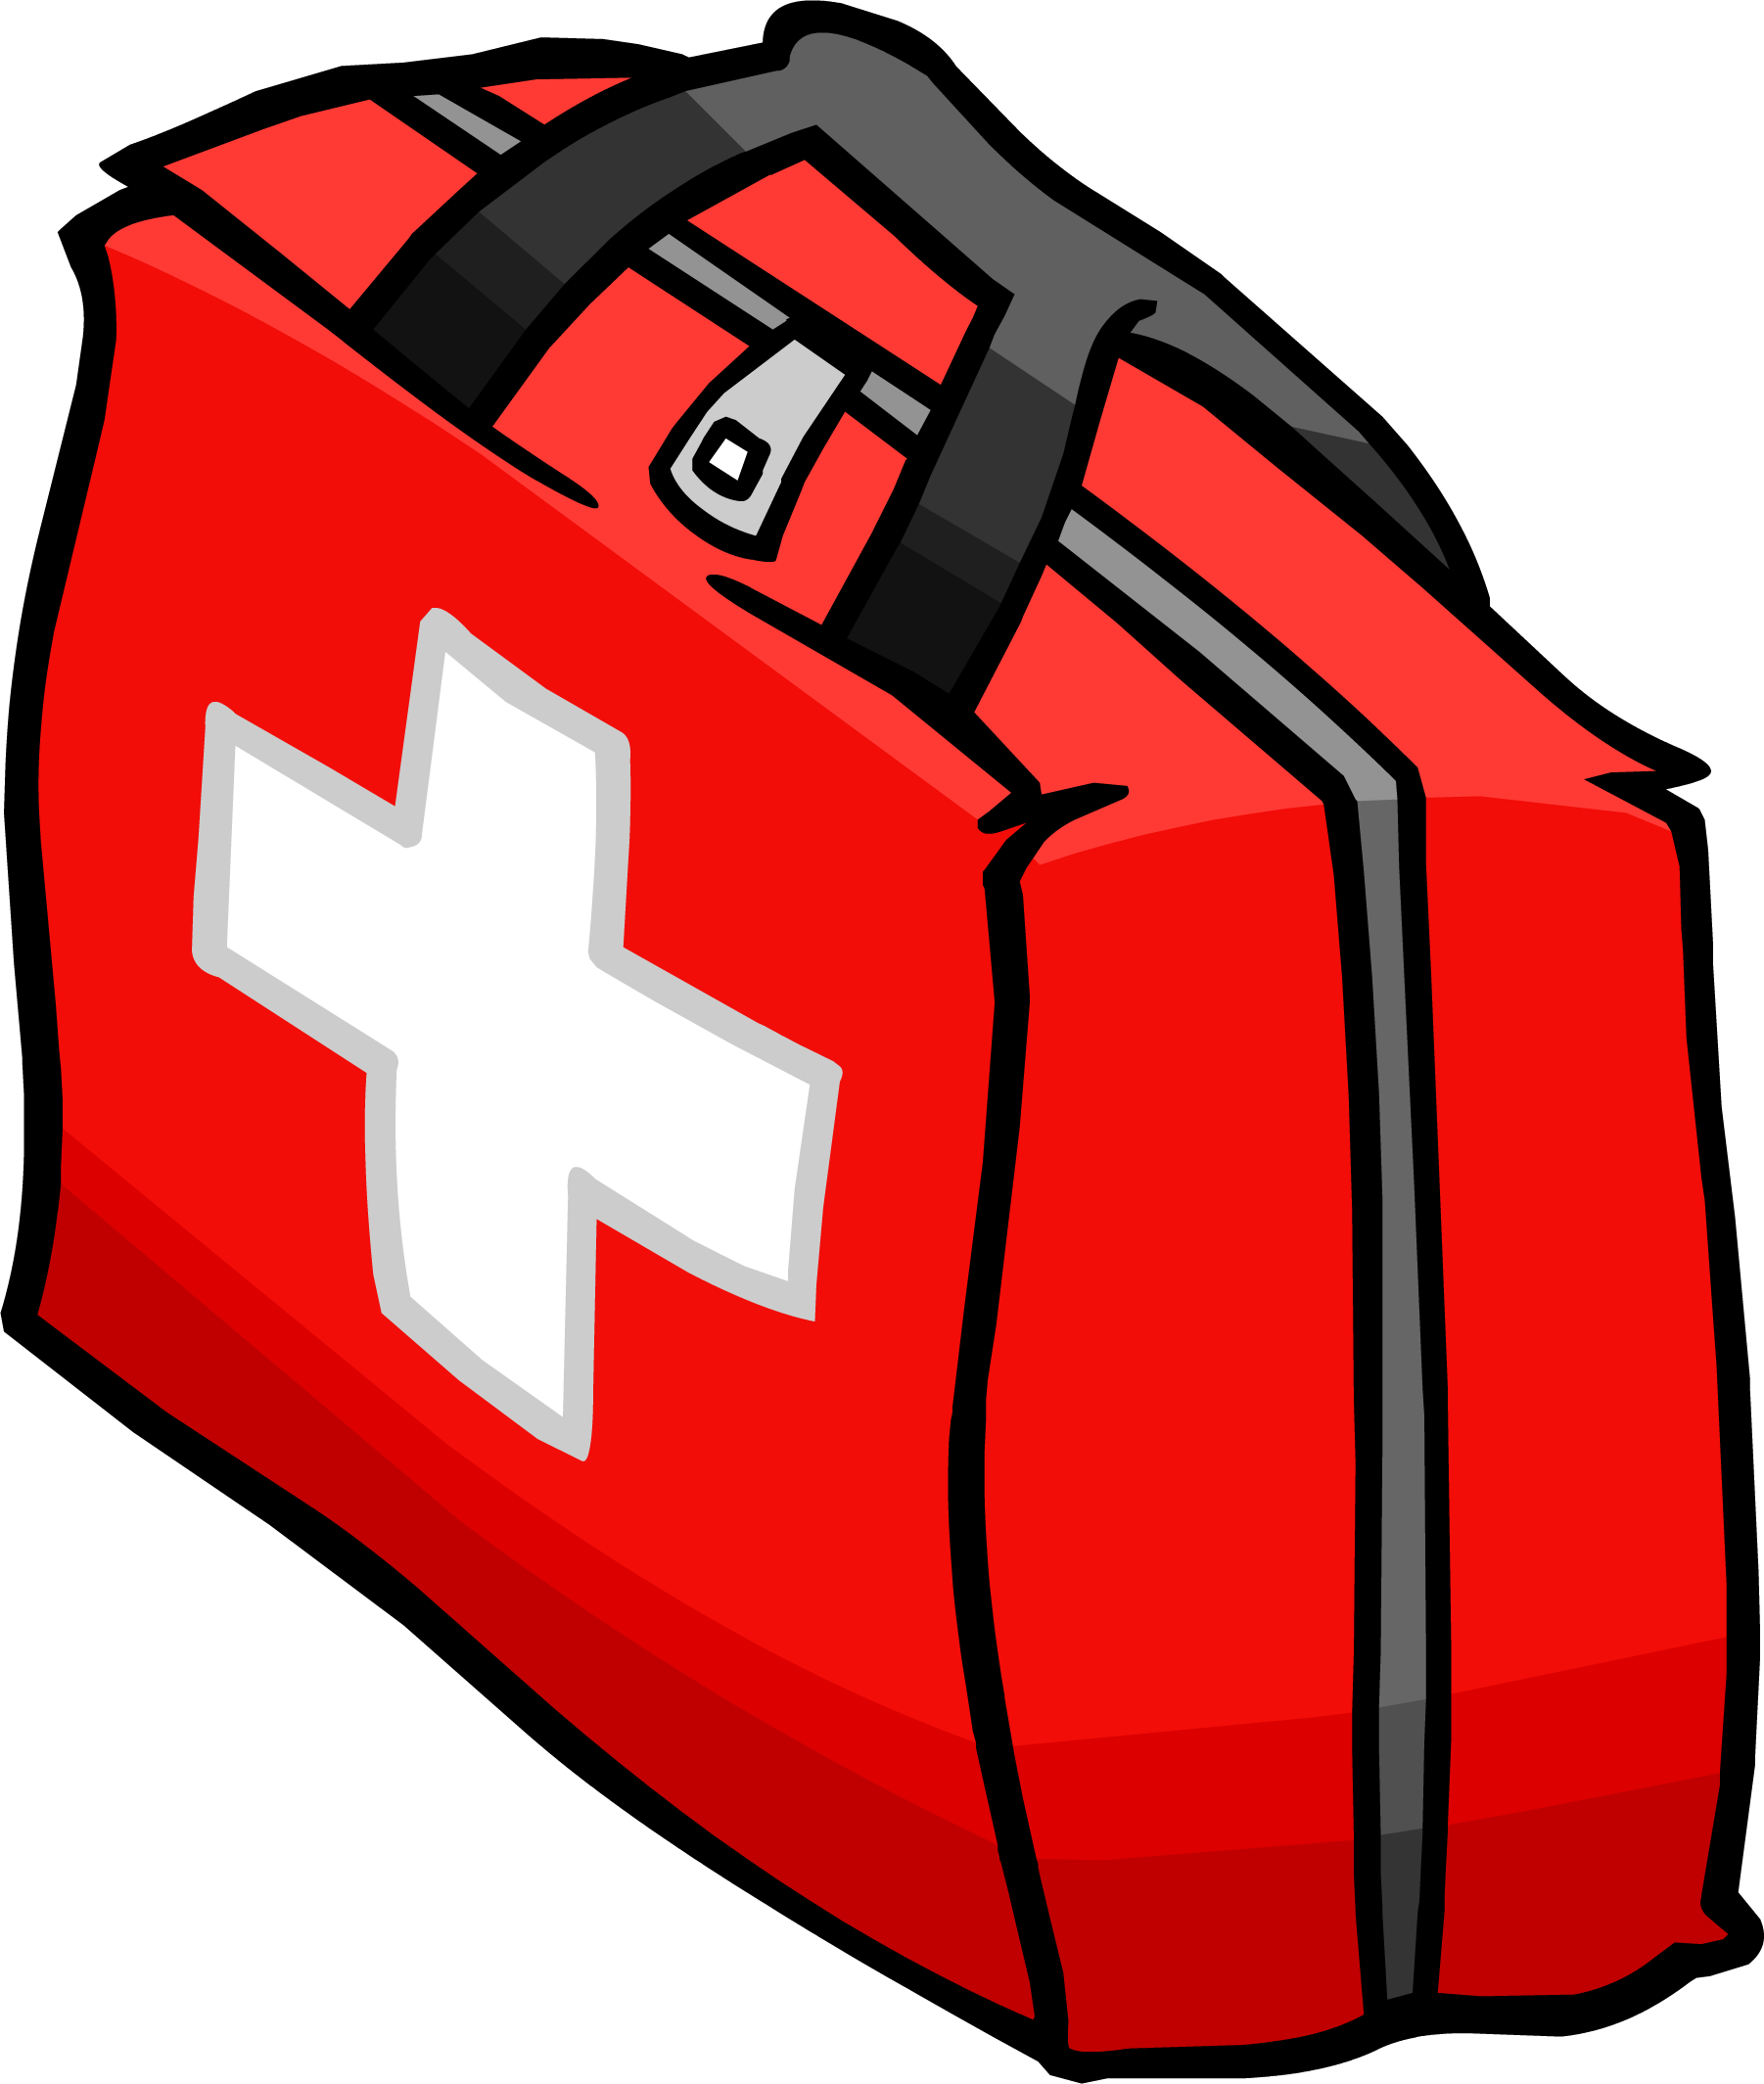 First Aid Kit | Club Penguin Wiki | Fandom powered by Wikia